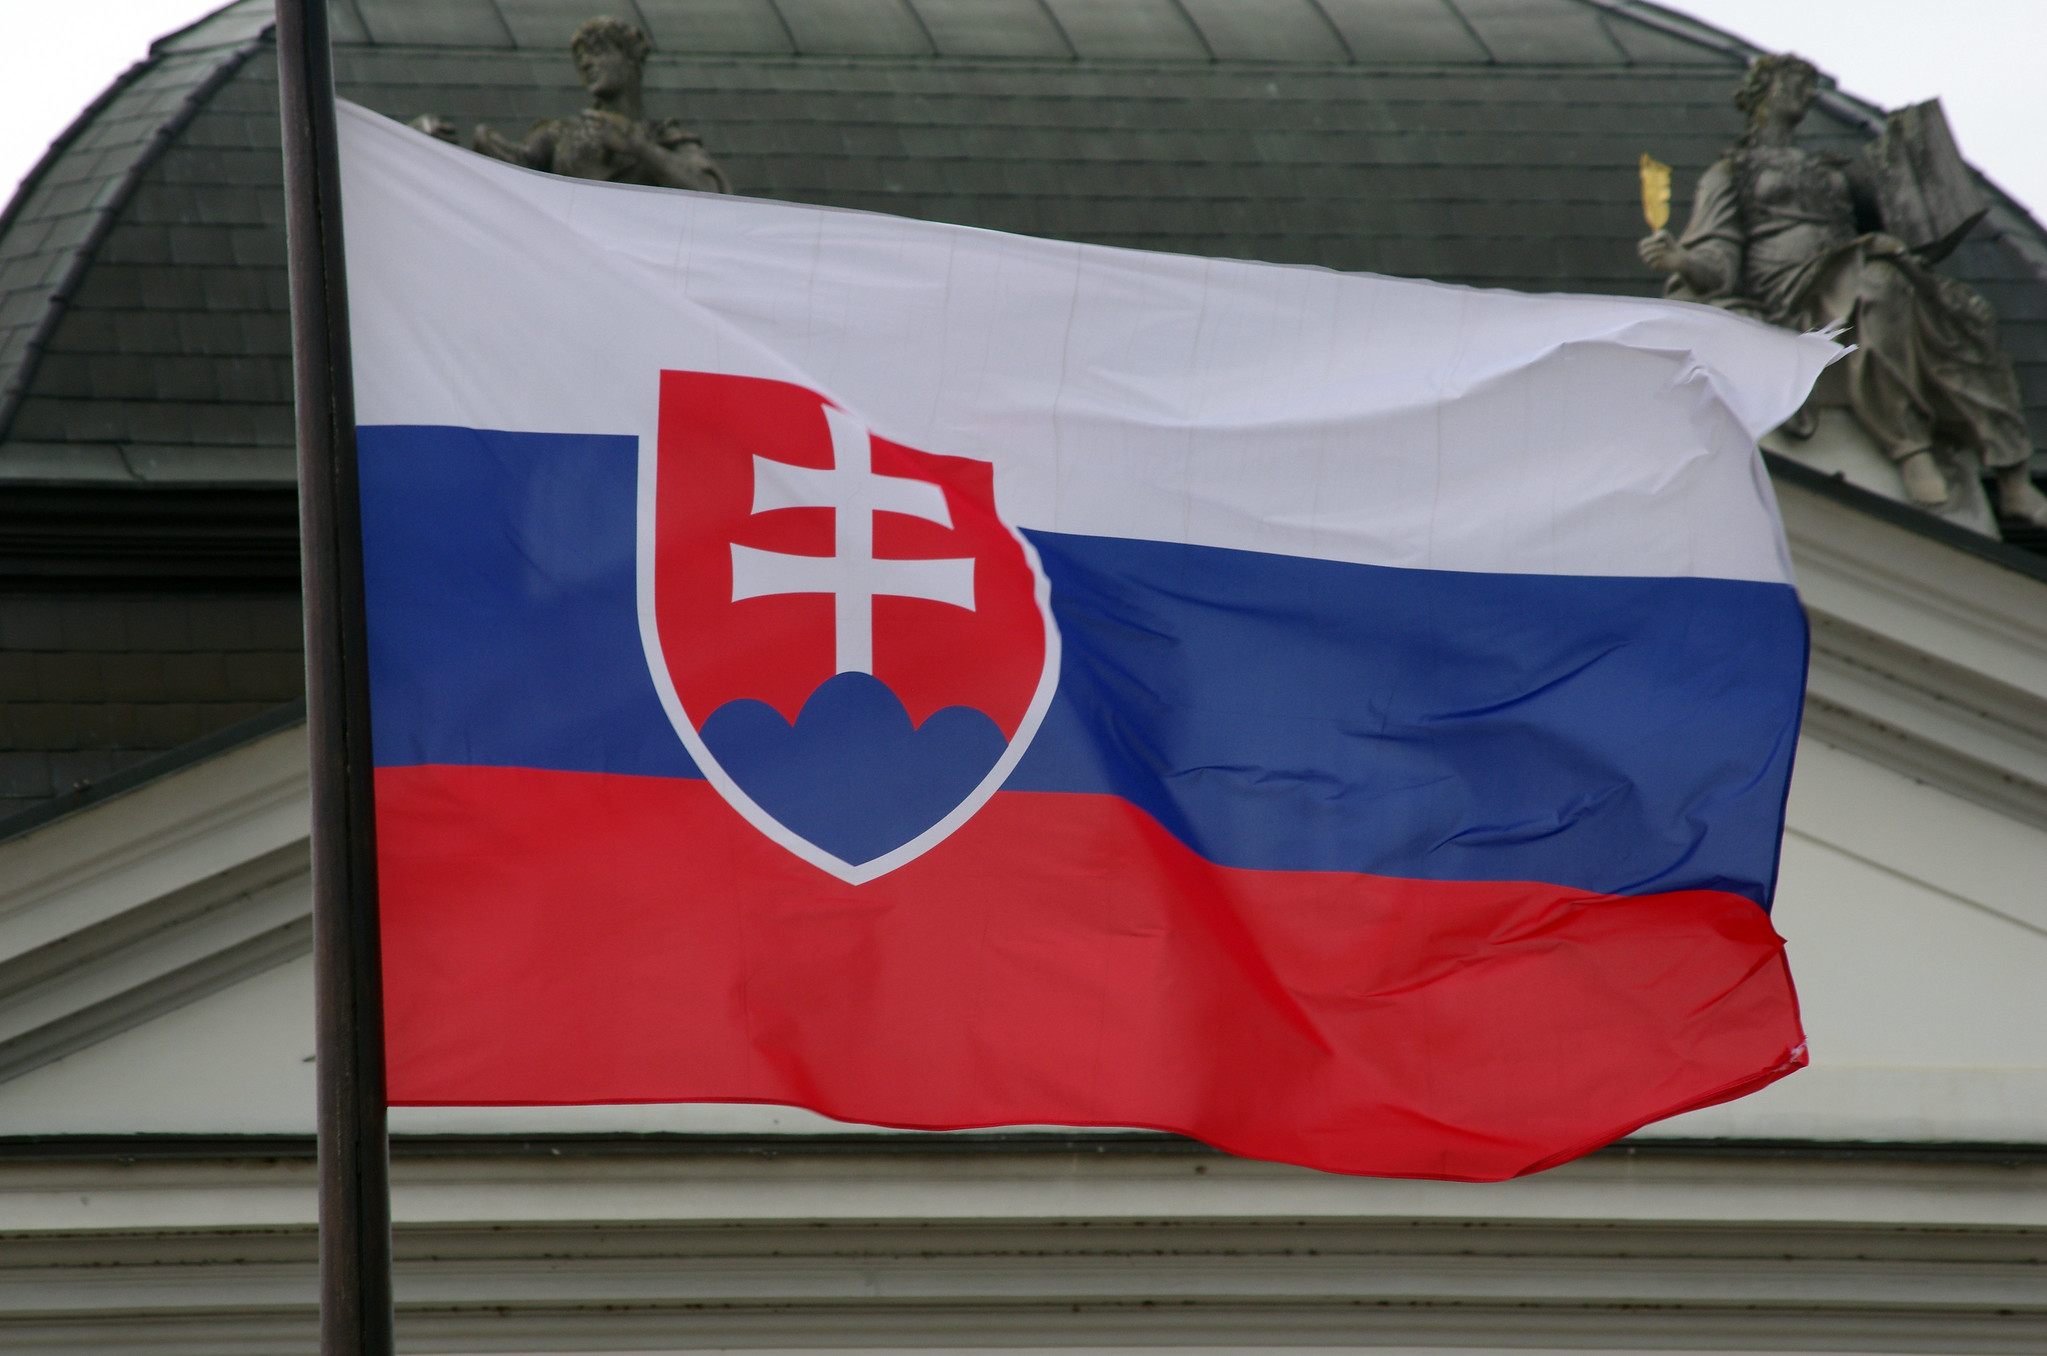 Во франции перепутали флаг. Флаг Словакии фото.